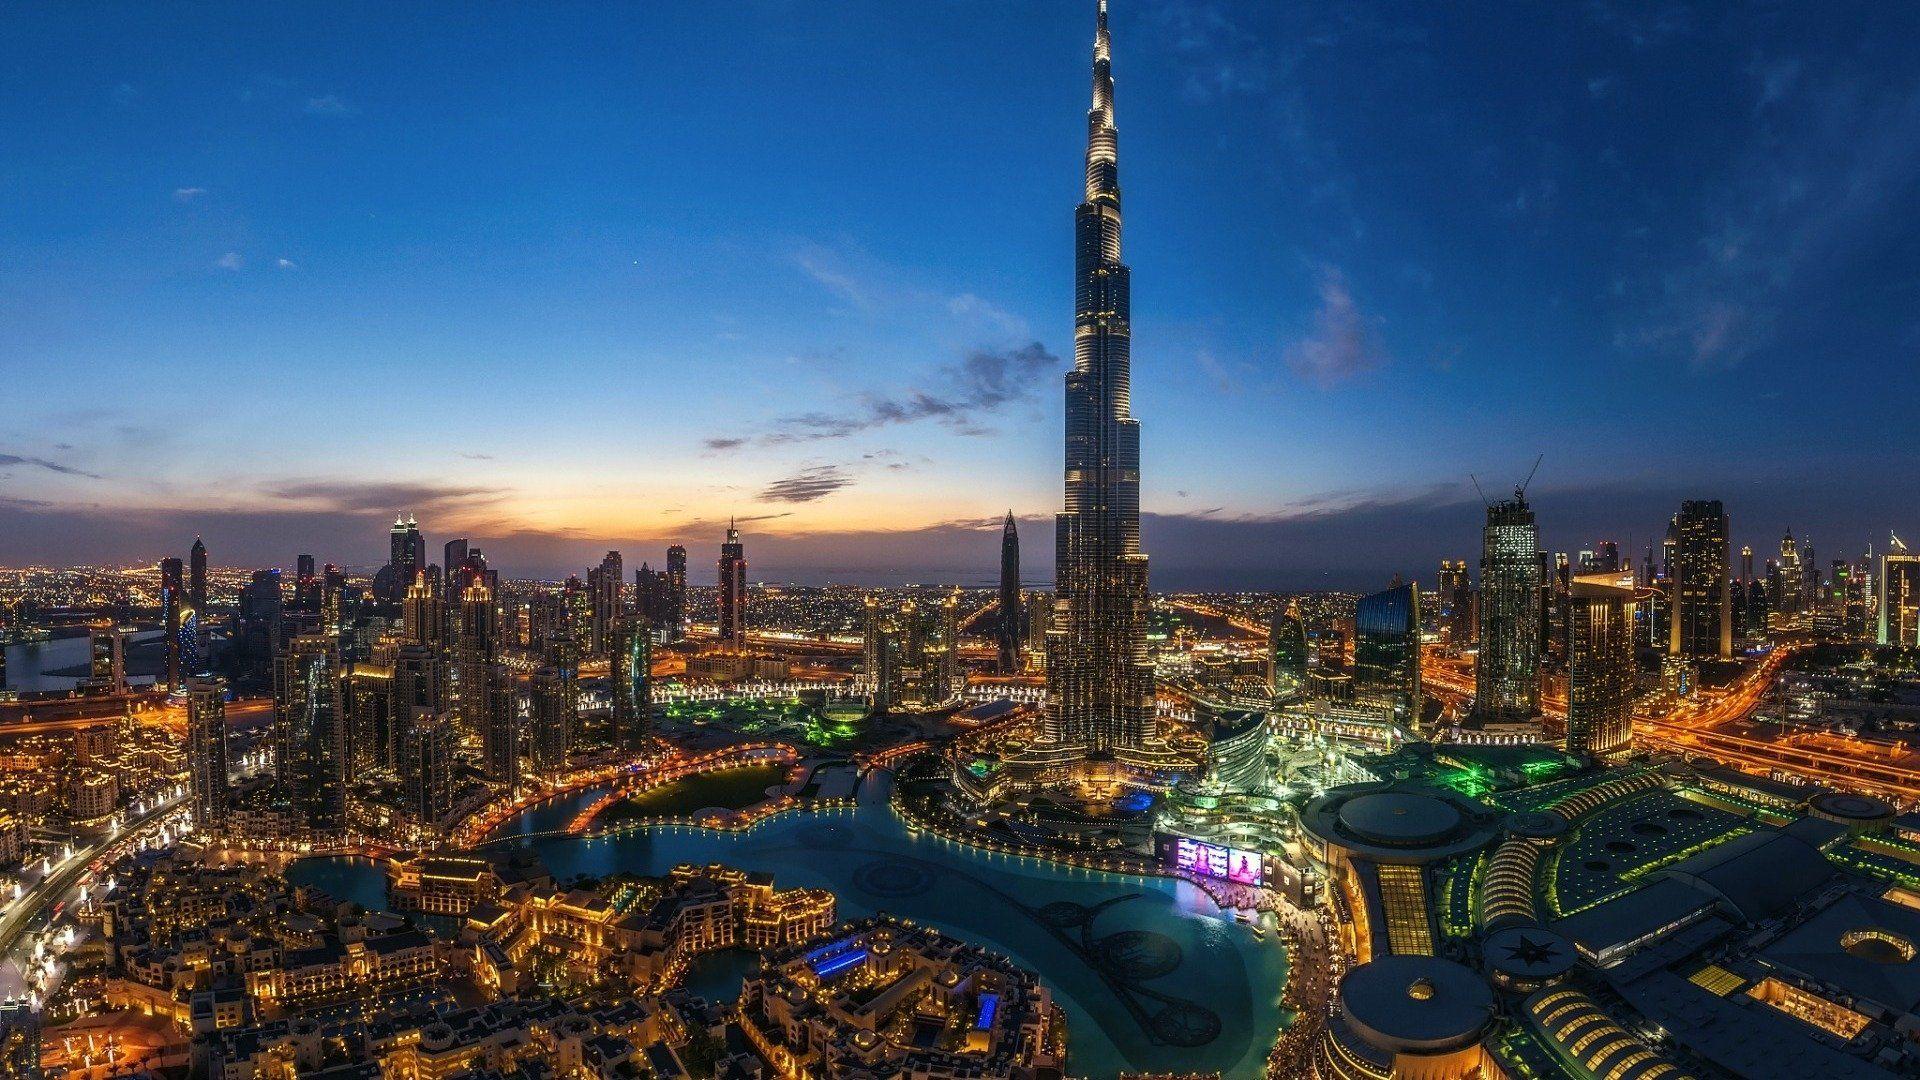 Hình nền 1920x1080 Night Lights in Dubai - Burj Khalifa Night 4k